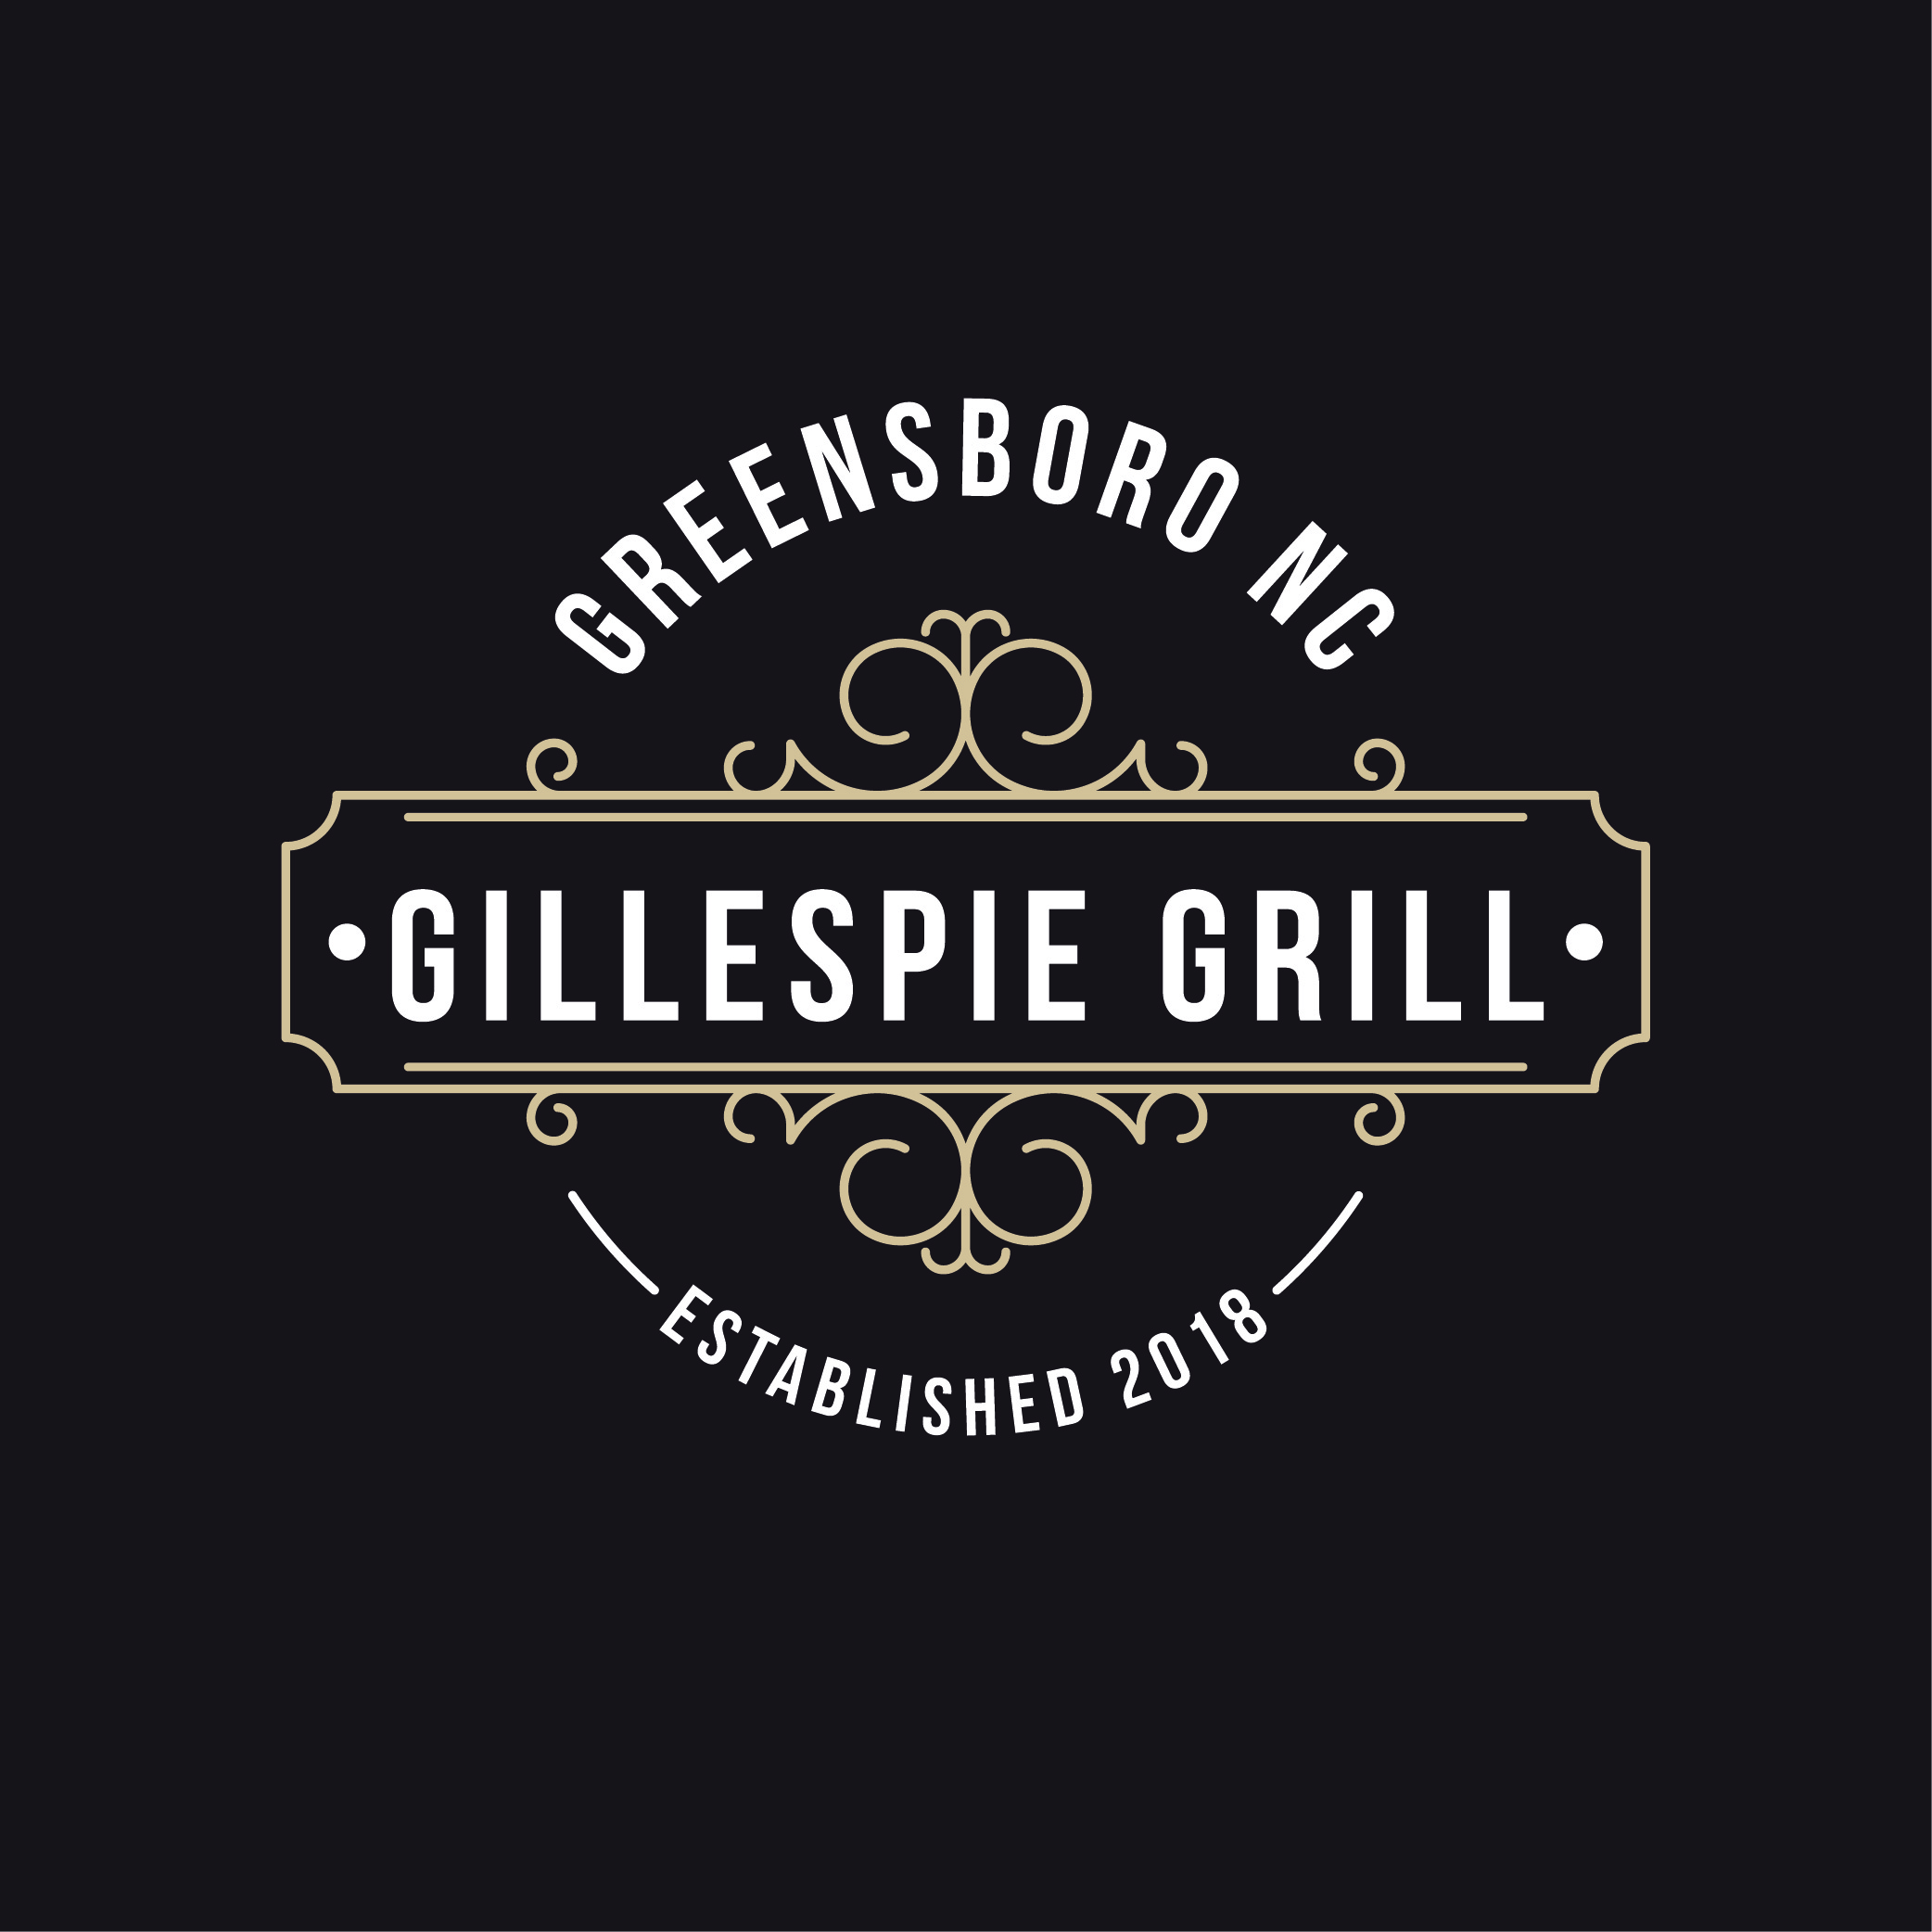 Gillespie Grill